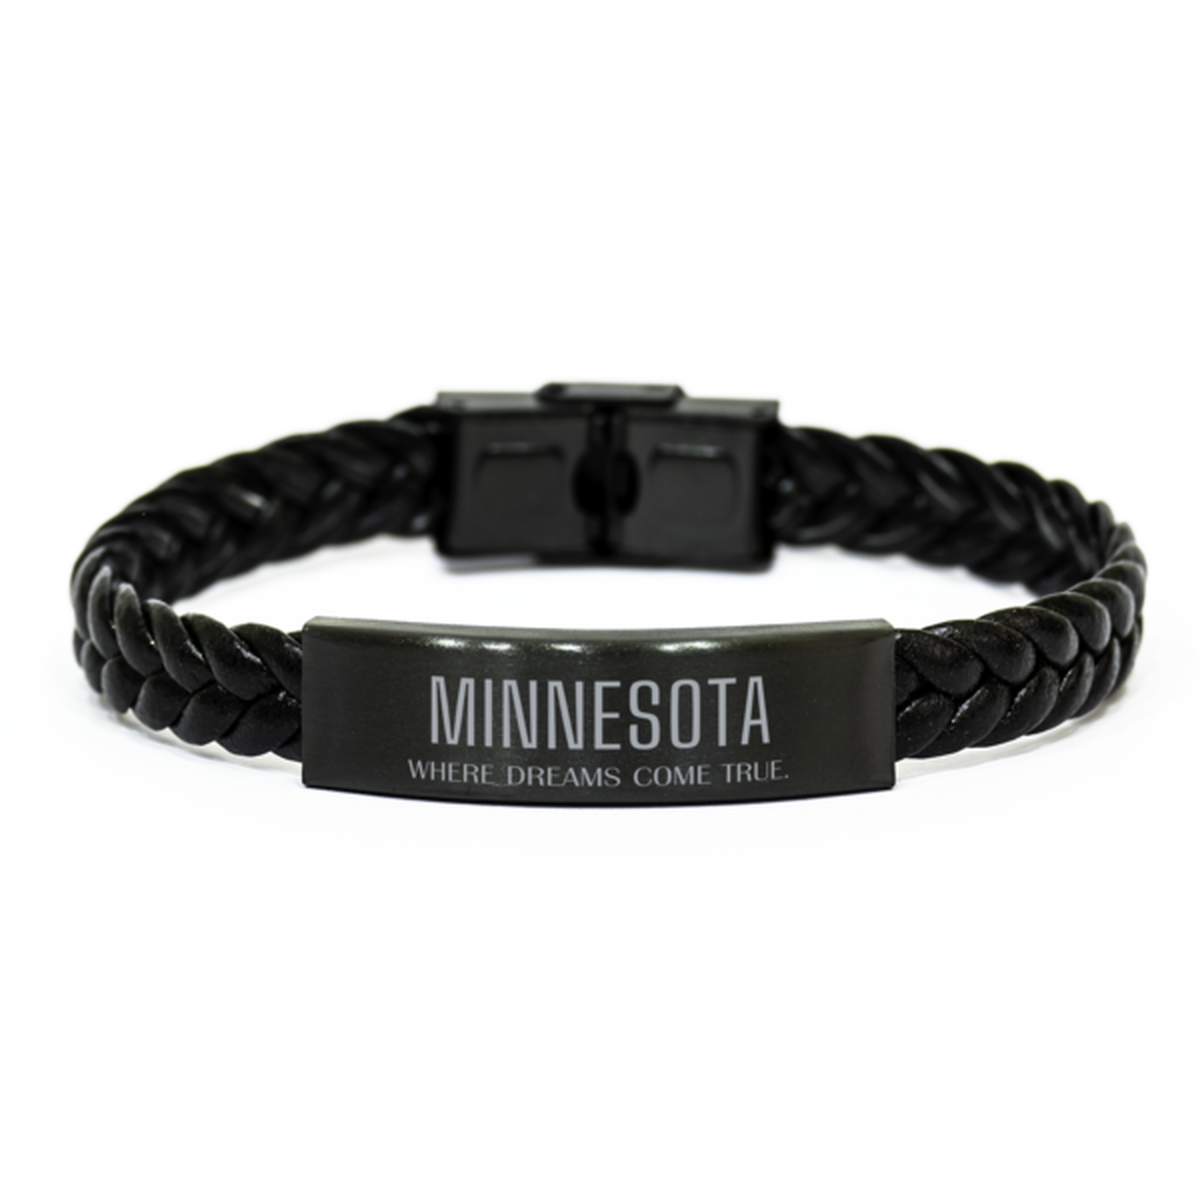 Love Minnesota State Braided Leather Bracelet, Minnesota Where dreams come true, Birthday Inspirational Gifts For Minnesota Men, Women, Friends